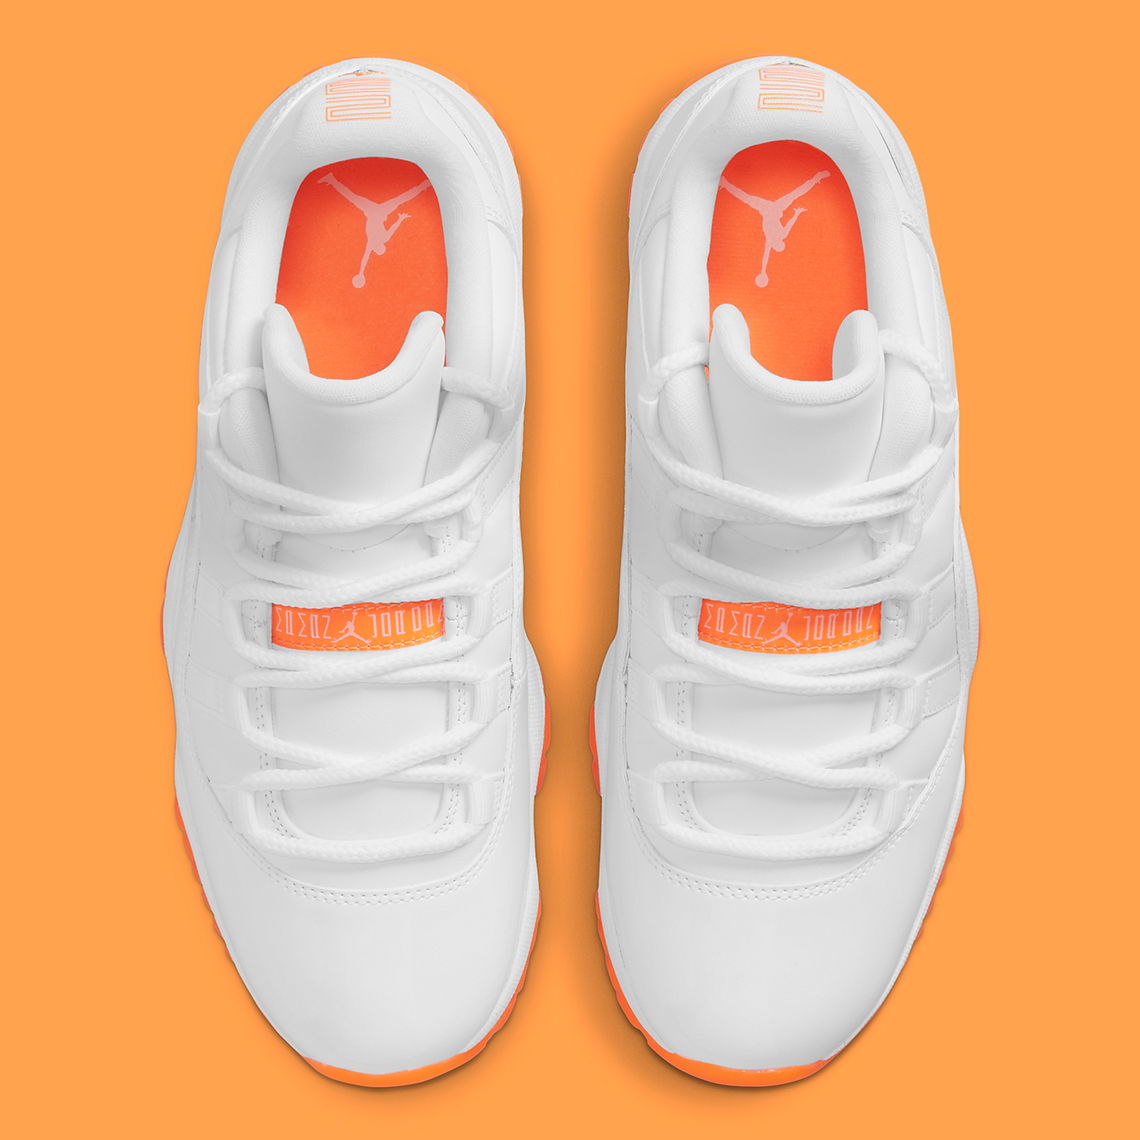 jordan 11s white and orange